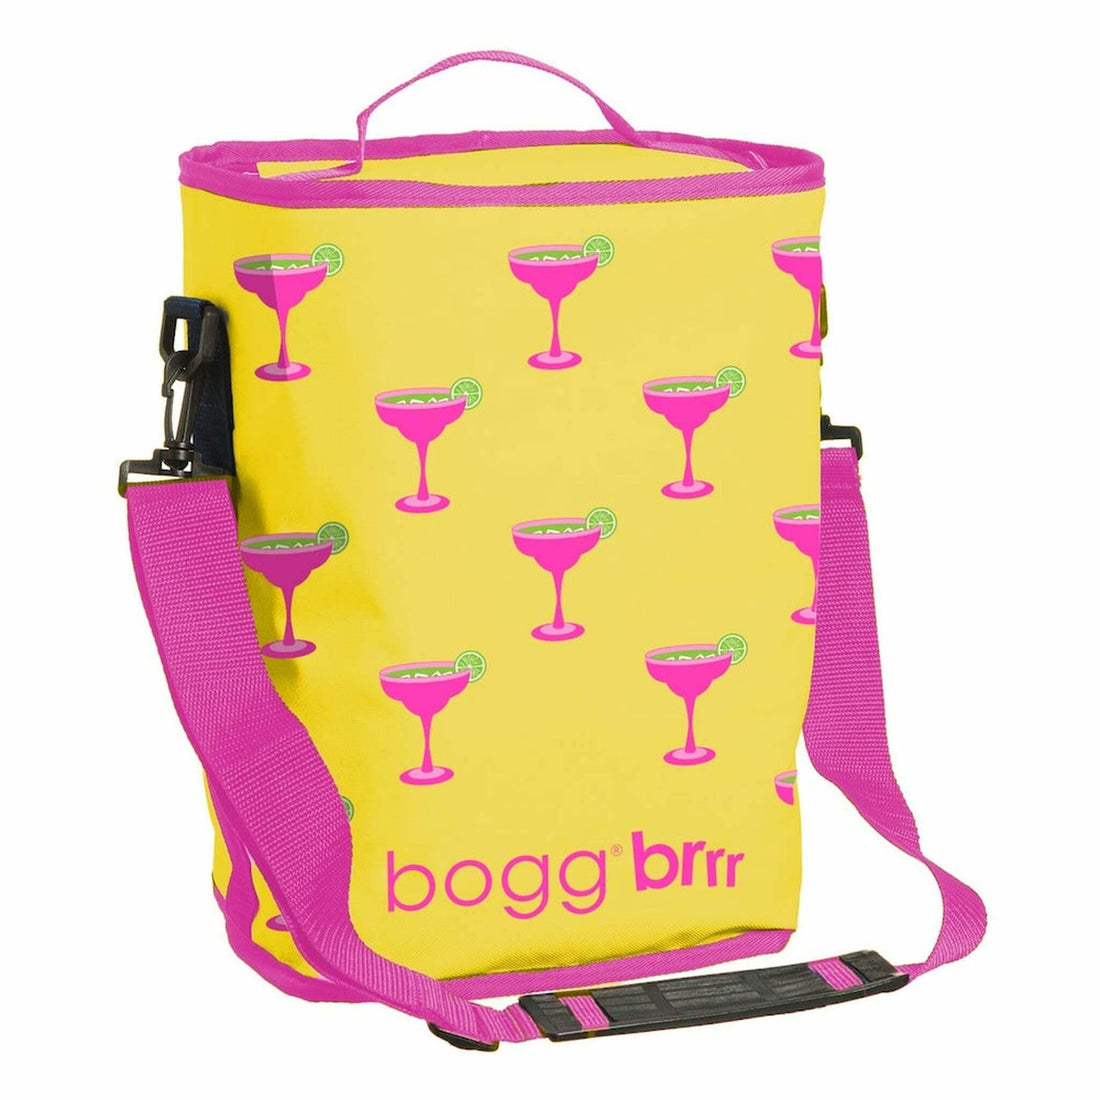 Bogg Bag Decorative Insert Bags - Flamingo